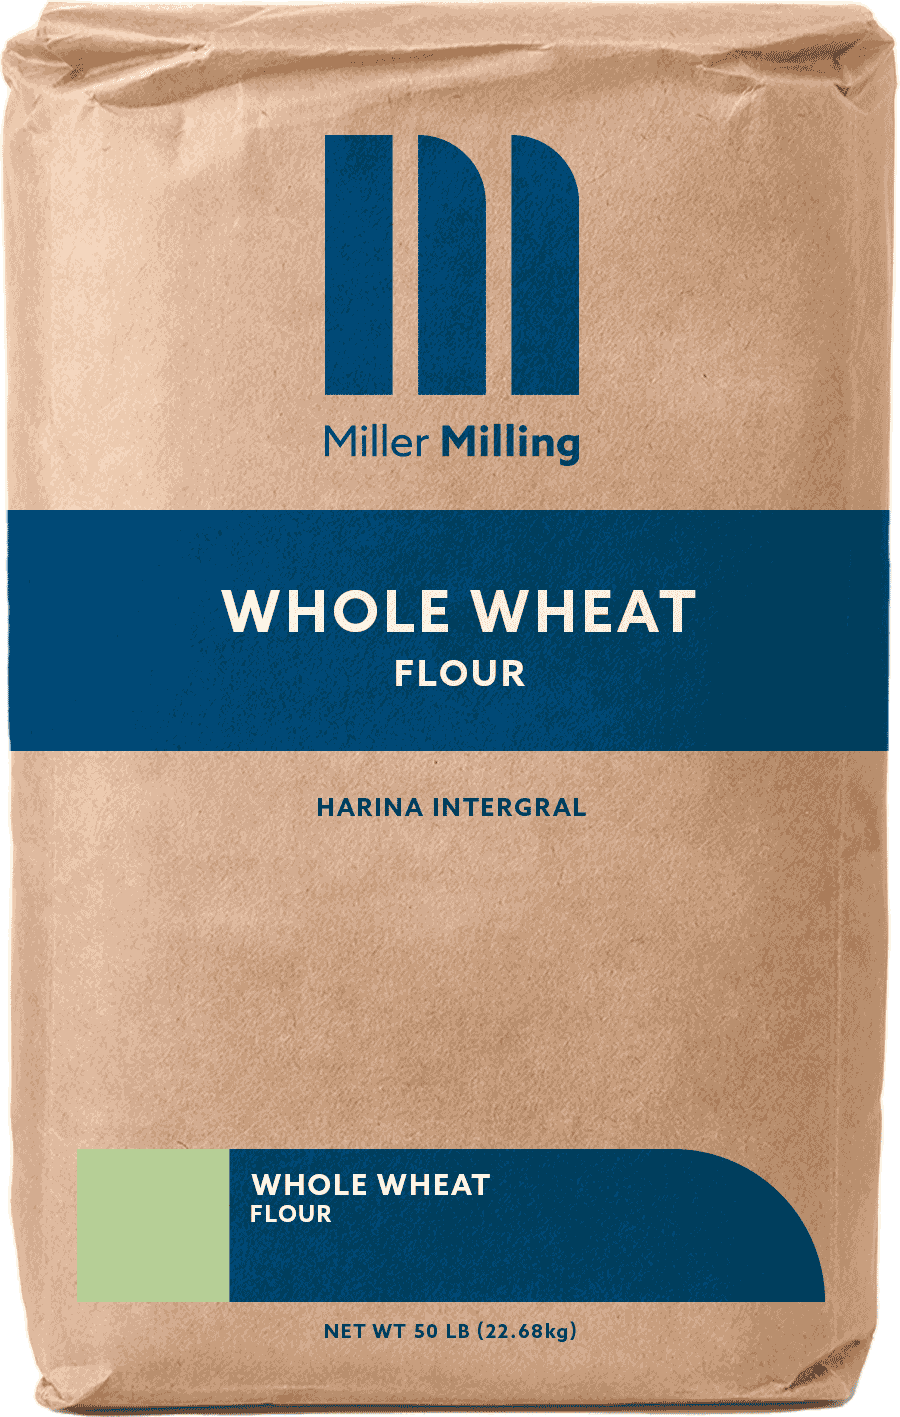 Whole Wheat flour